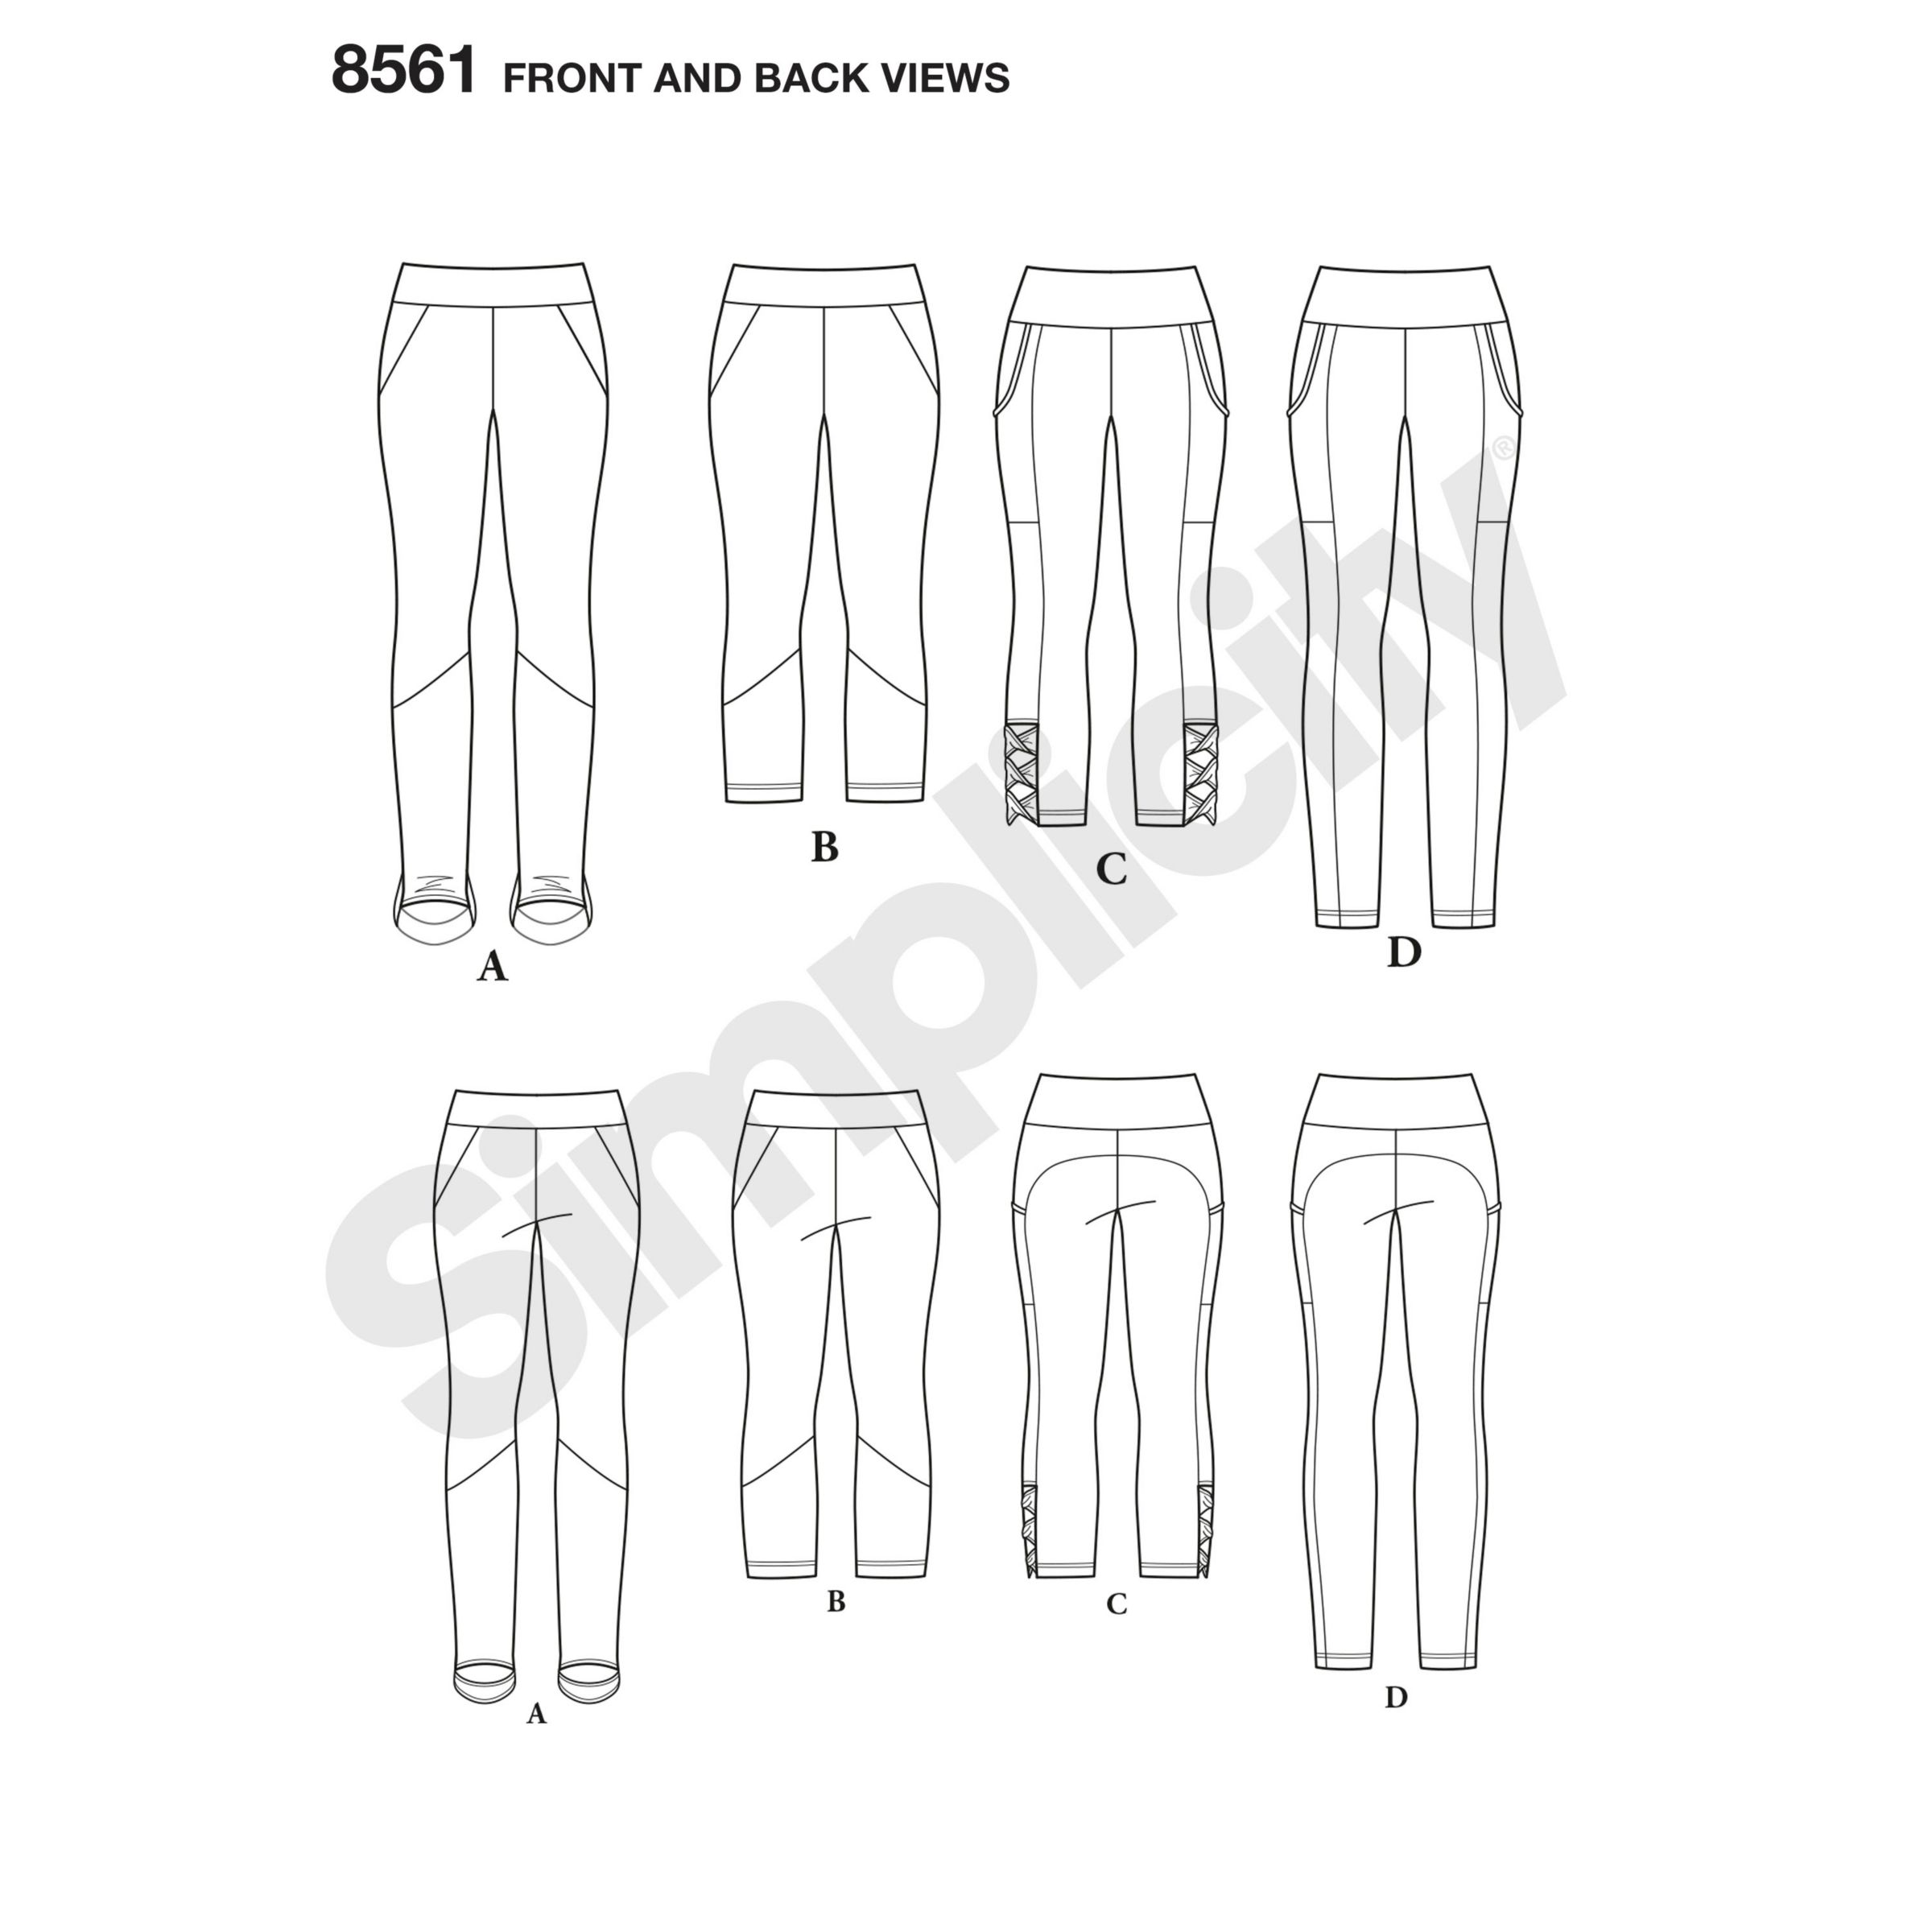 Simplicity Women's Leggings Sewing Pattern, 8561, AA